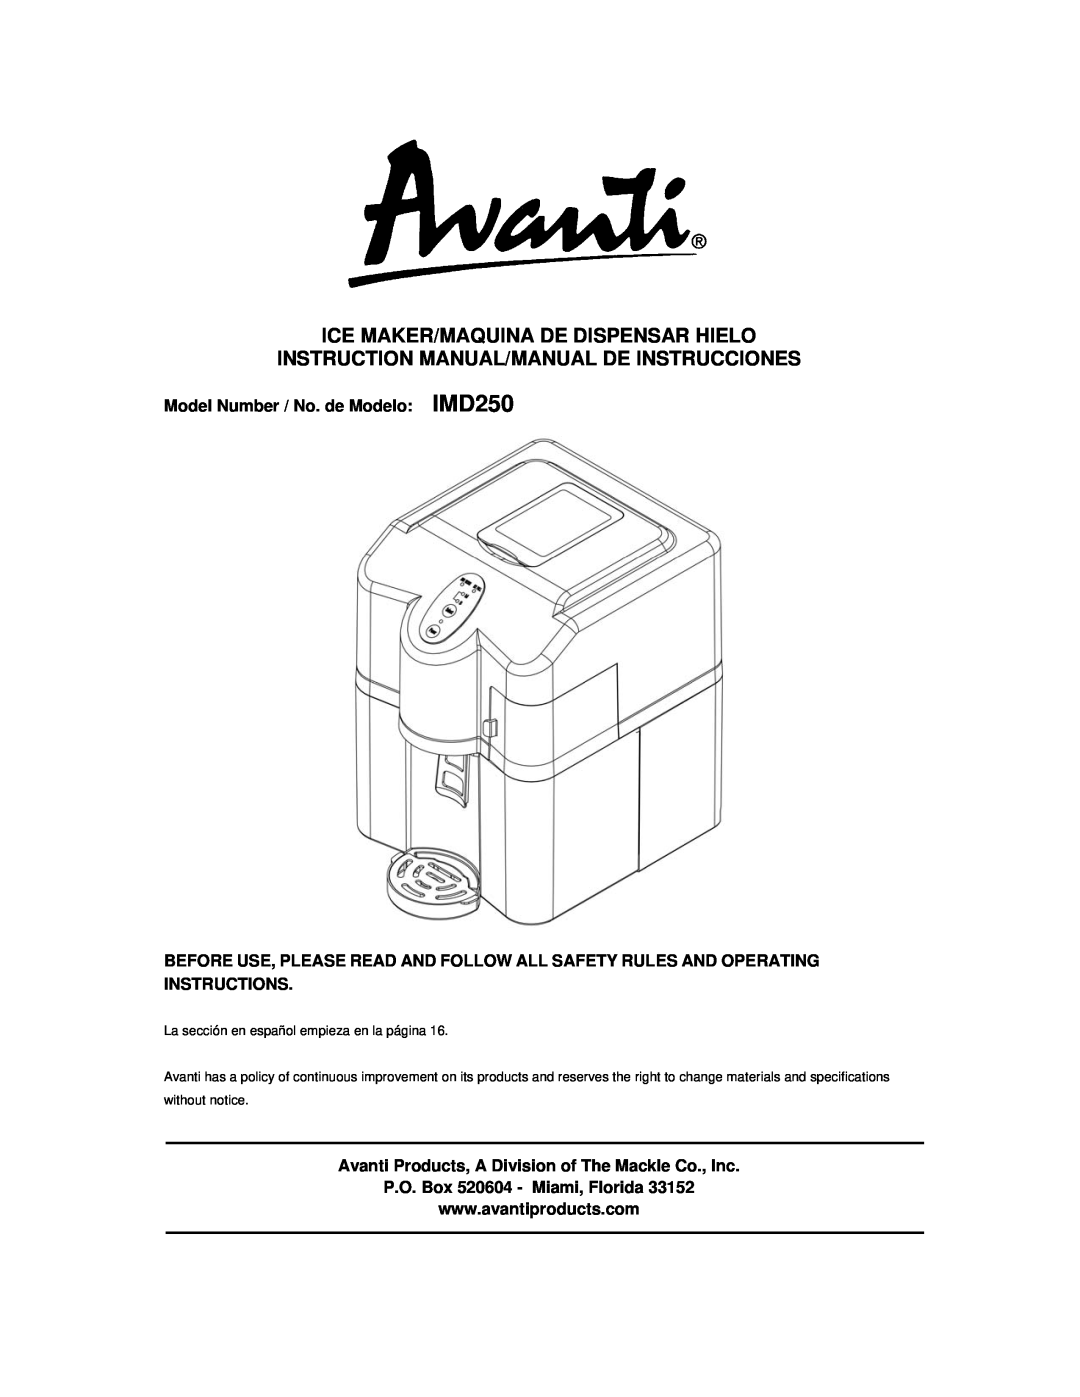 Avanti instruction manual Ice Maker/Maquina De Dispensar Hielo, Model Number / No. de Modelo IMD250 